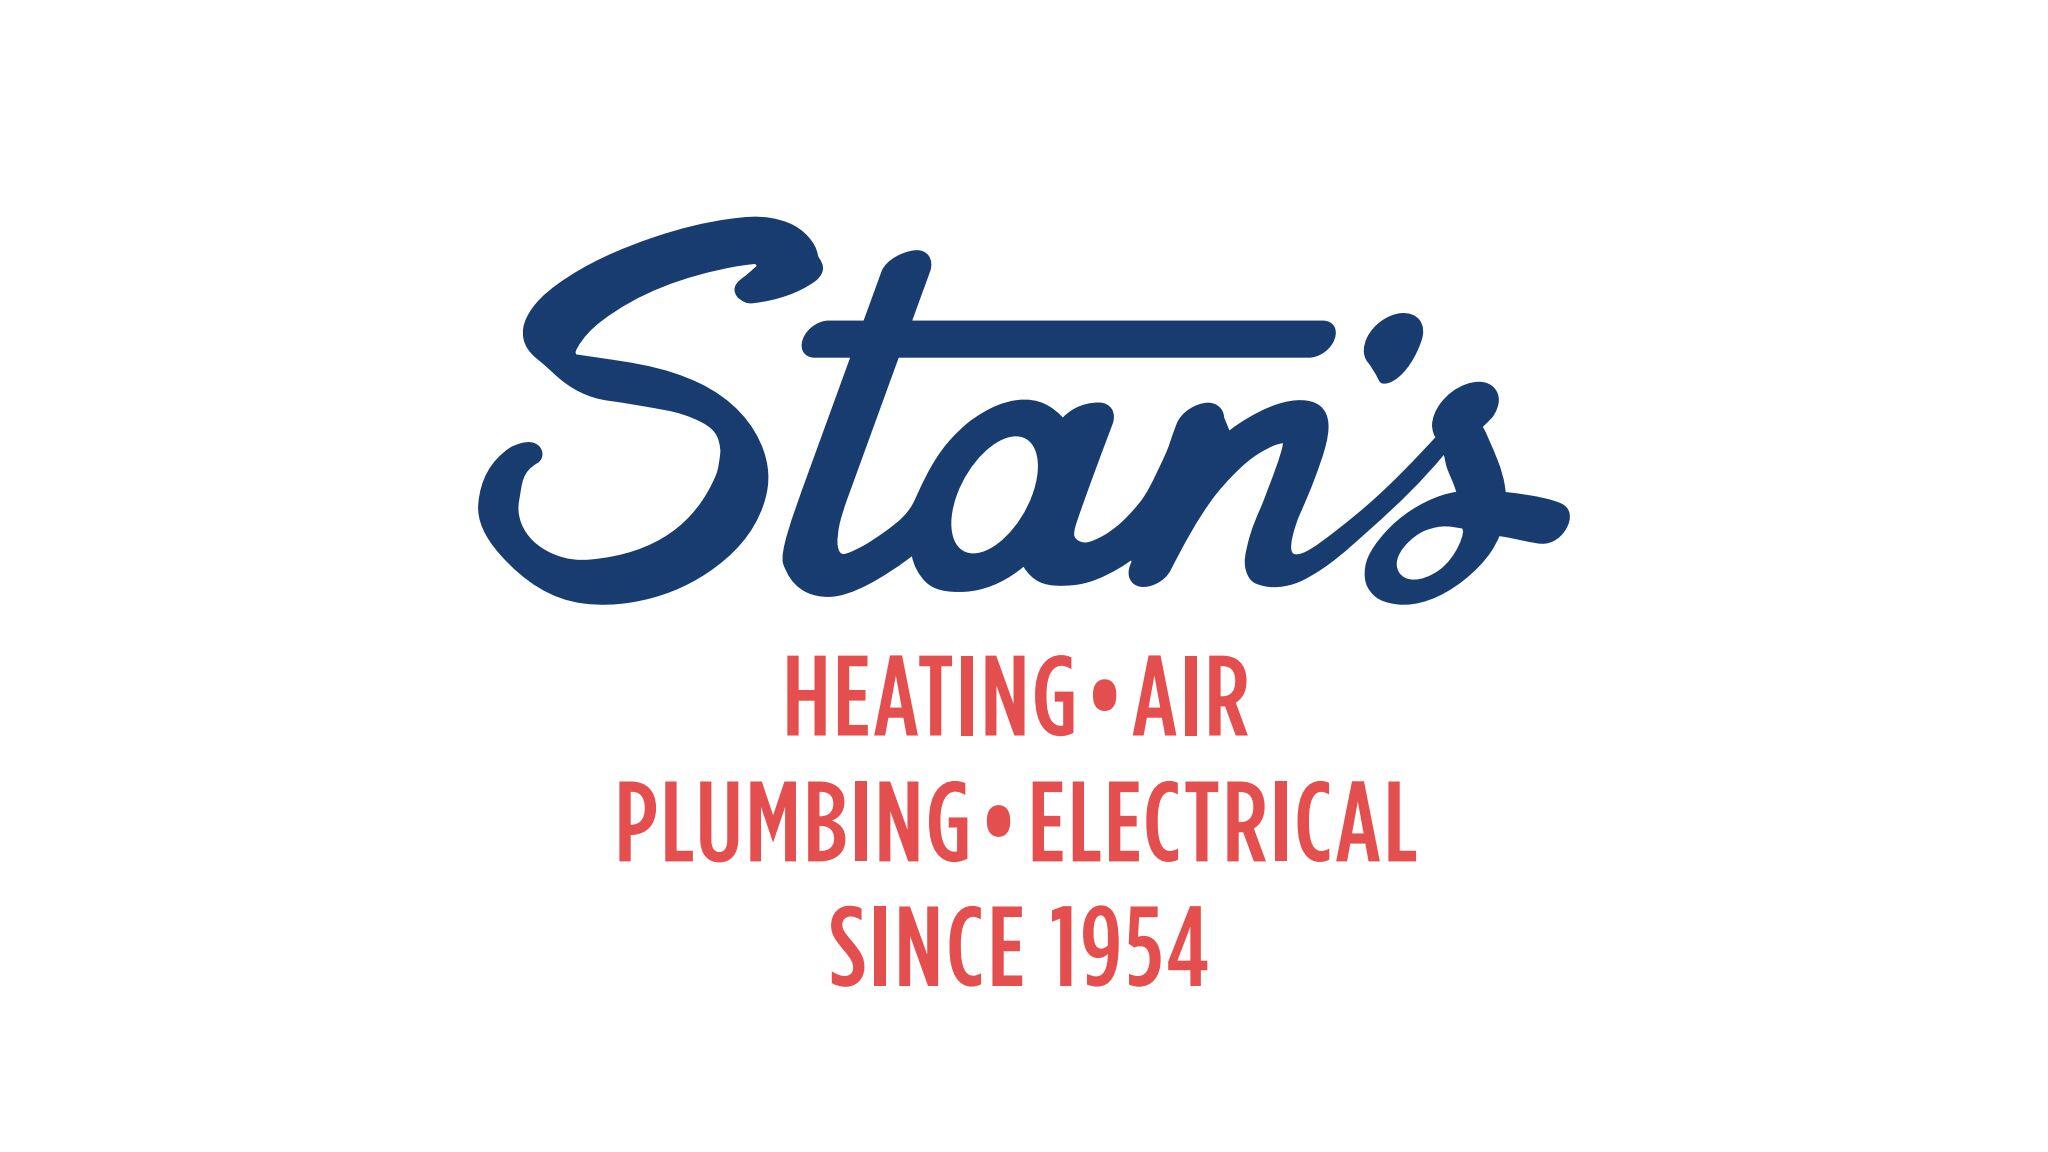 Drain Cleaning in Austin, TX  Stan's Heating, Air & Plumbing